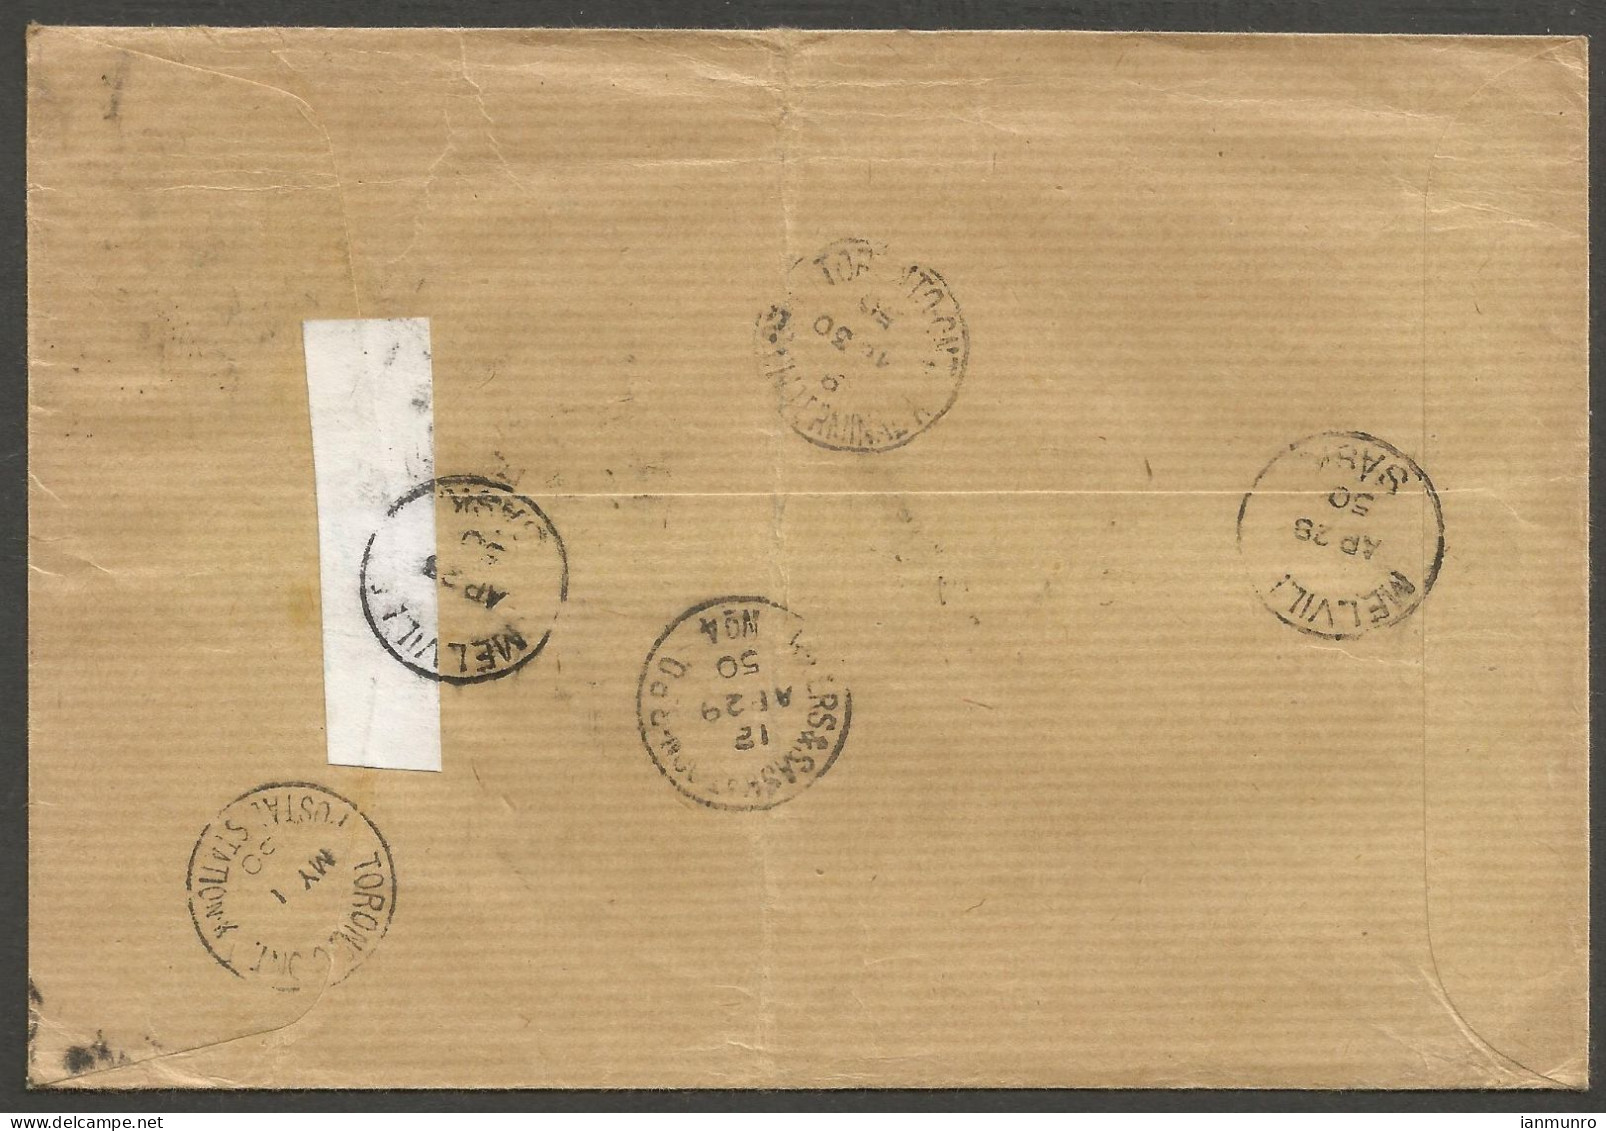 1950 Stamp Dealer Reply Cover Registered 18c Peace/GVI RPO CDS Melville Saskatchewan - Postgeschichte